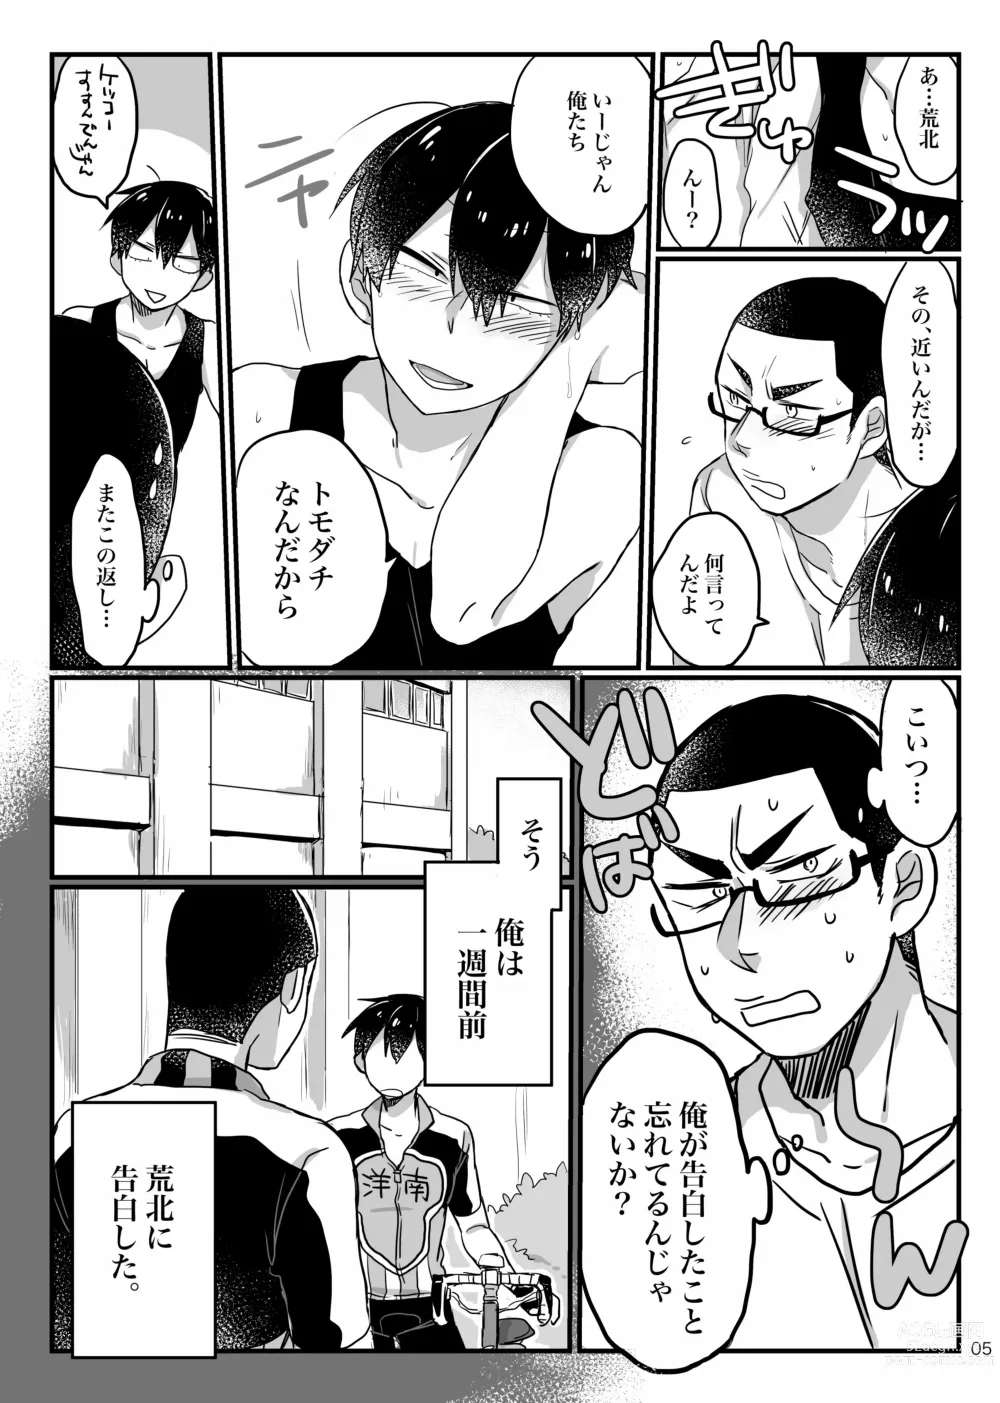 Page 4 of doujinshi Baby wo Namagoroshii!